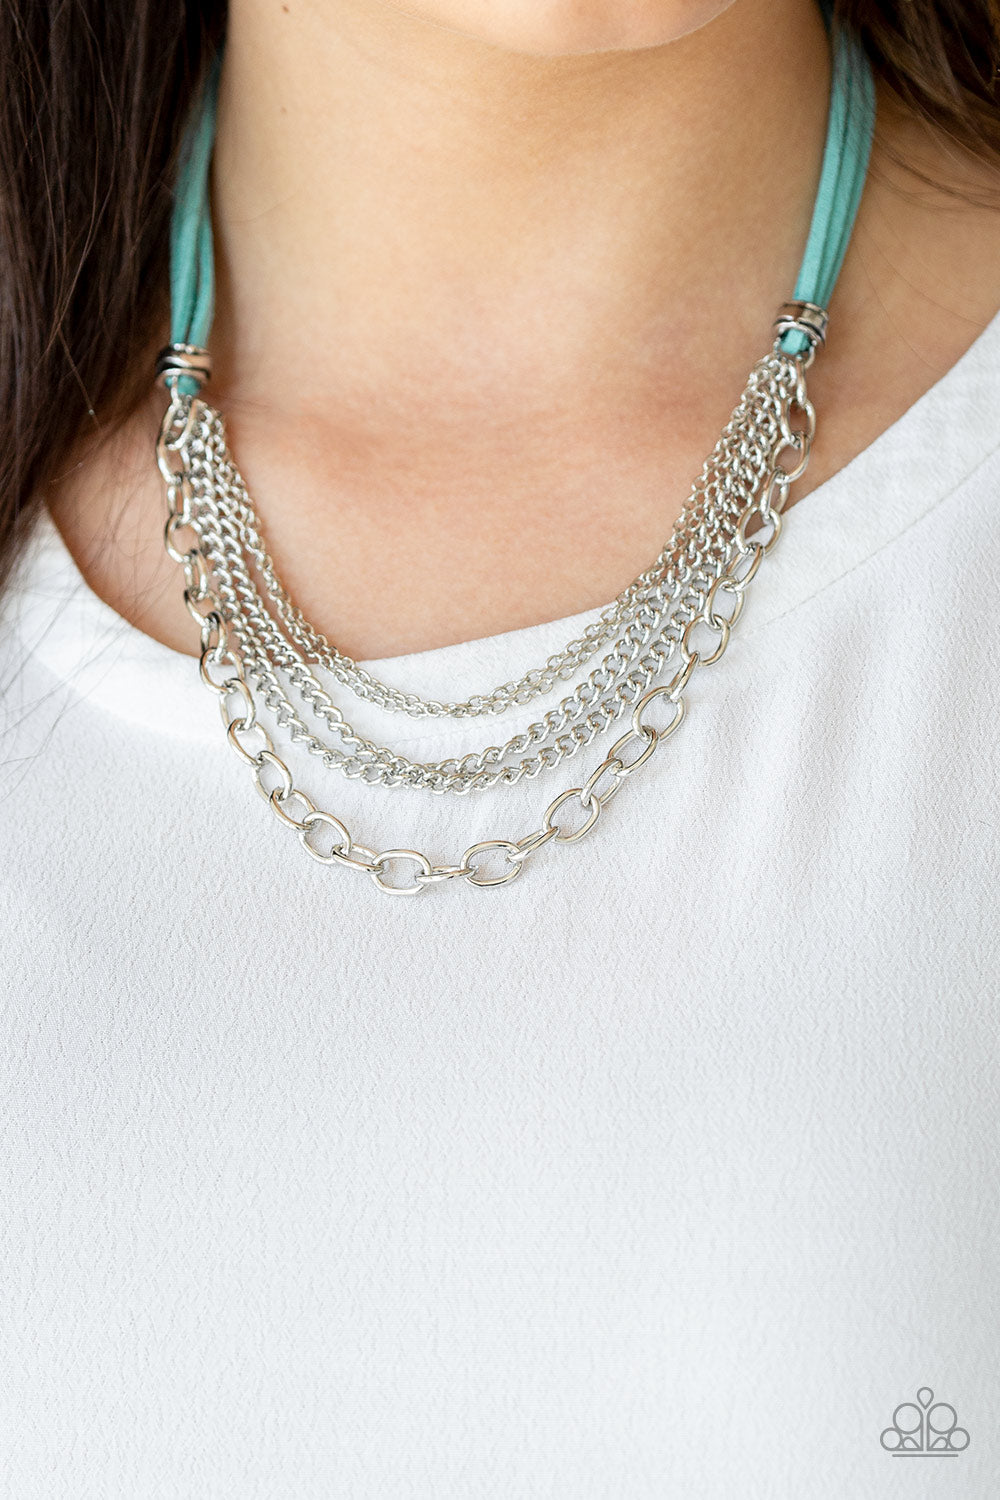 Paparazzi Free Roamer - Blue - Suede - Silver Chain Necklace & Earrings - $5 Jewelry with Ashley Swint